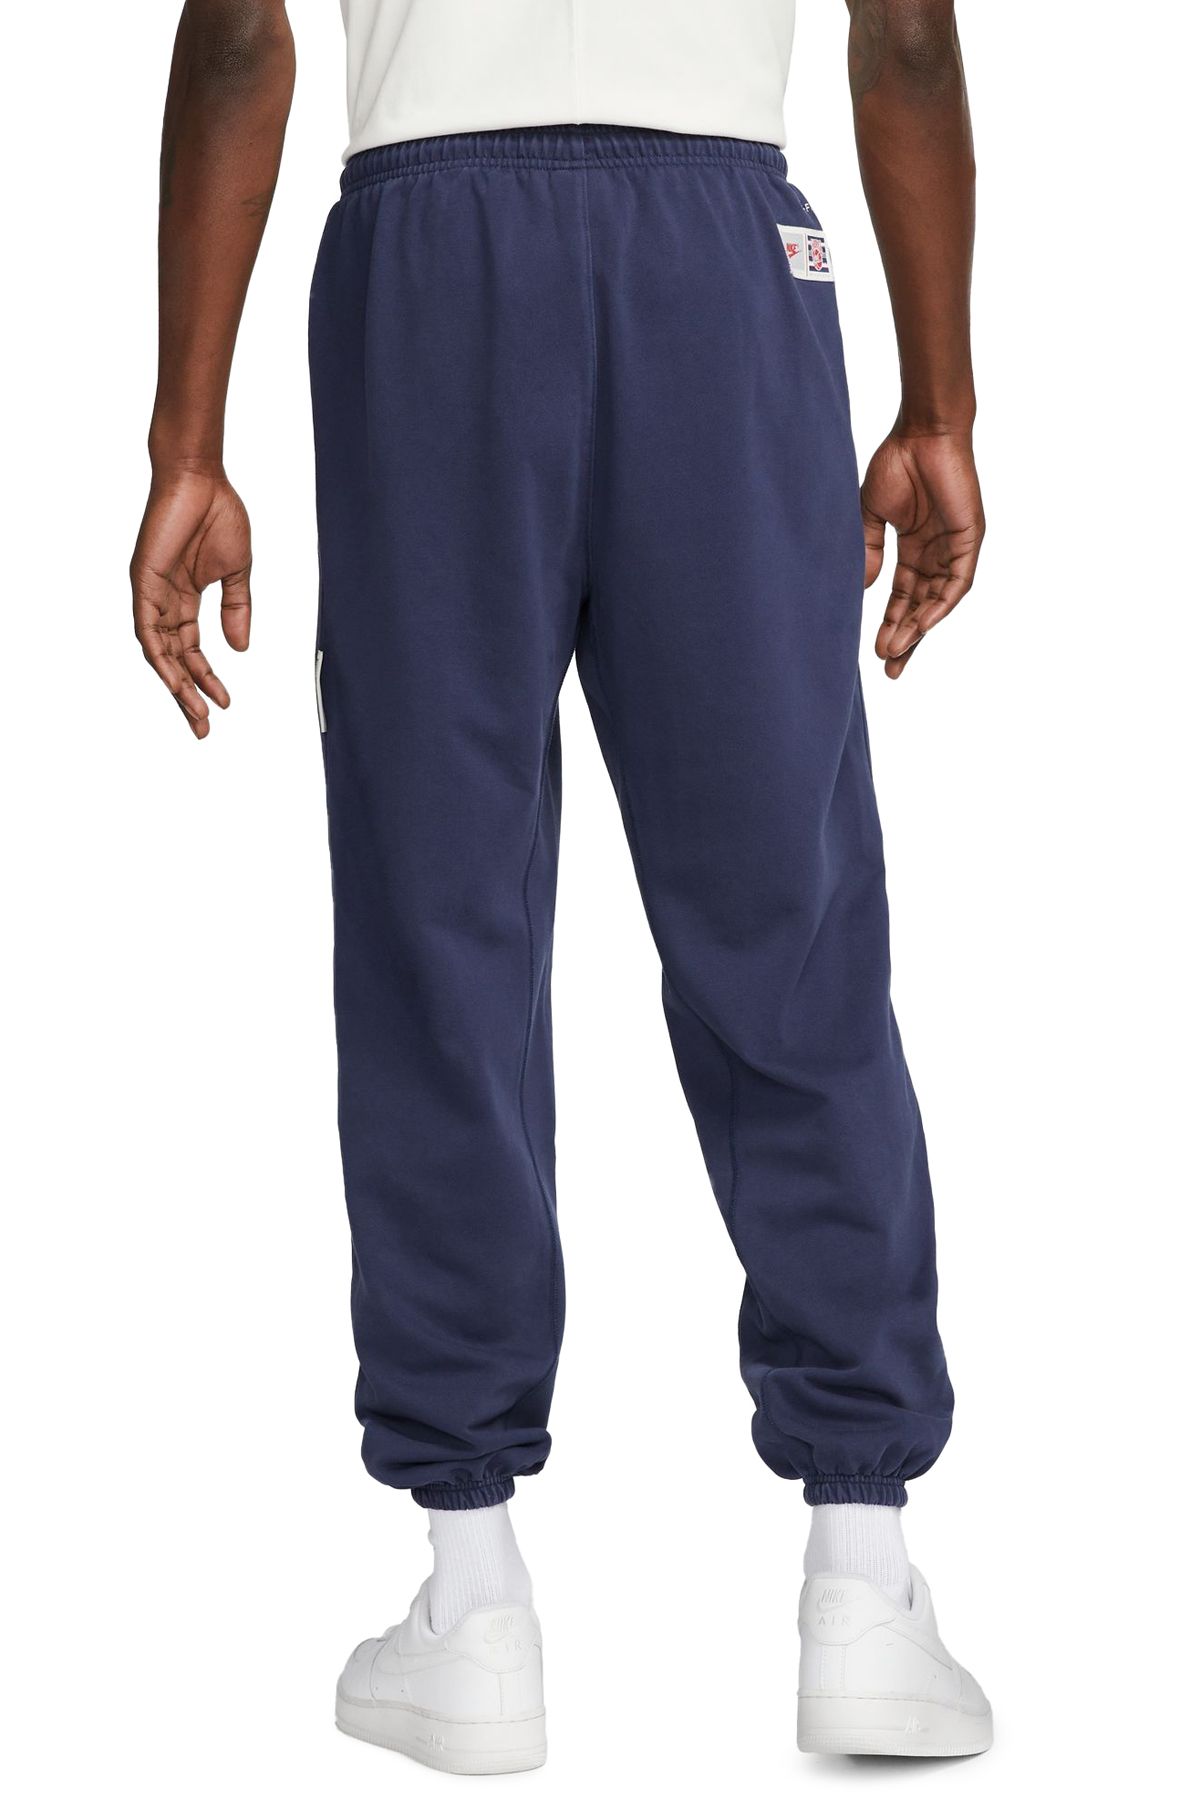 Nike Dri-FIT Standard Issue Men's Cuffed Basketball Pants. Nike